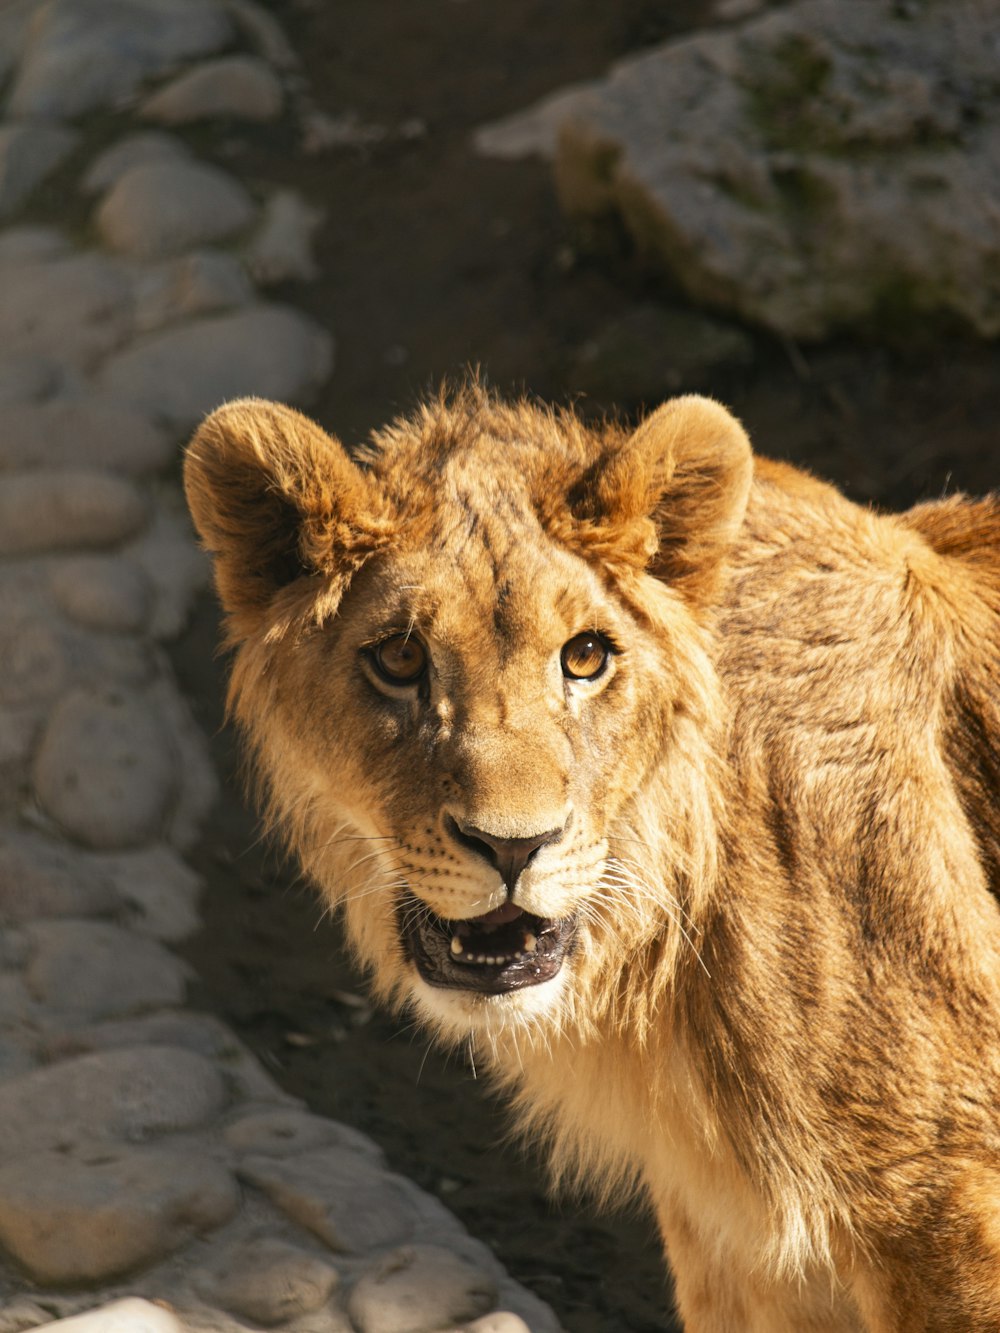 a close up of a lion on a rocky surface